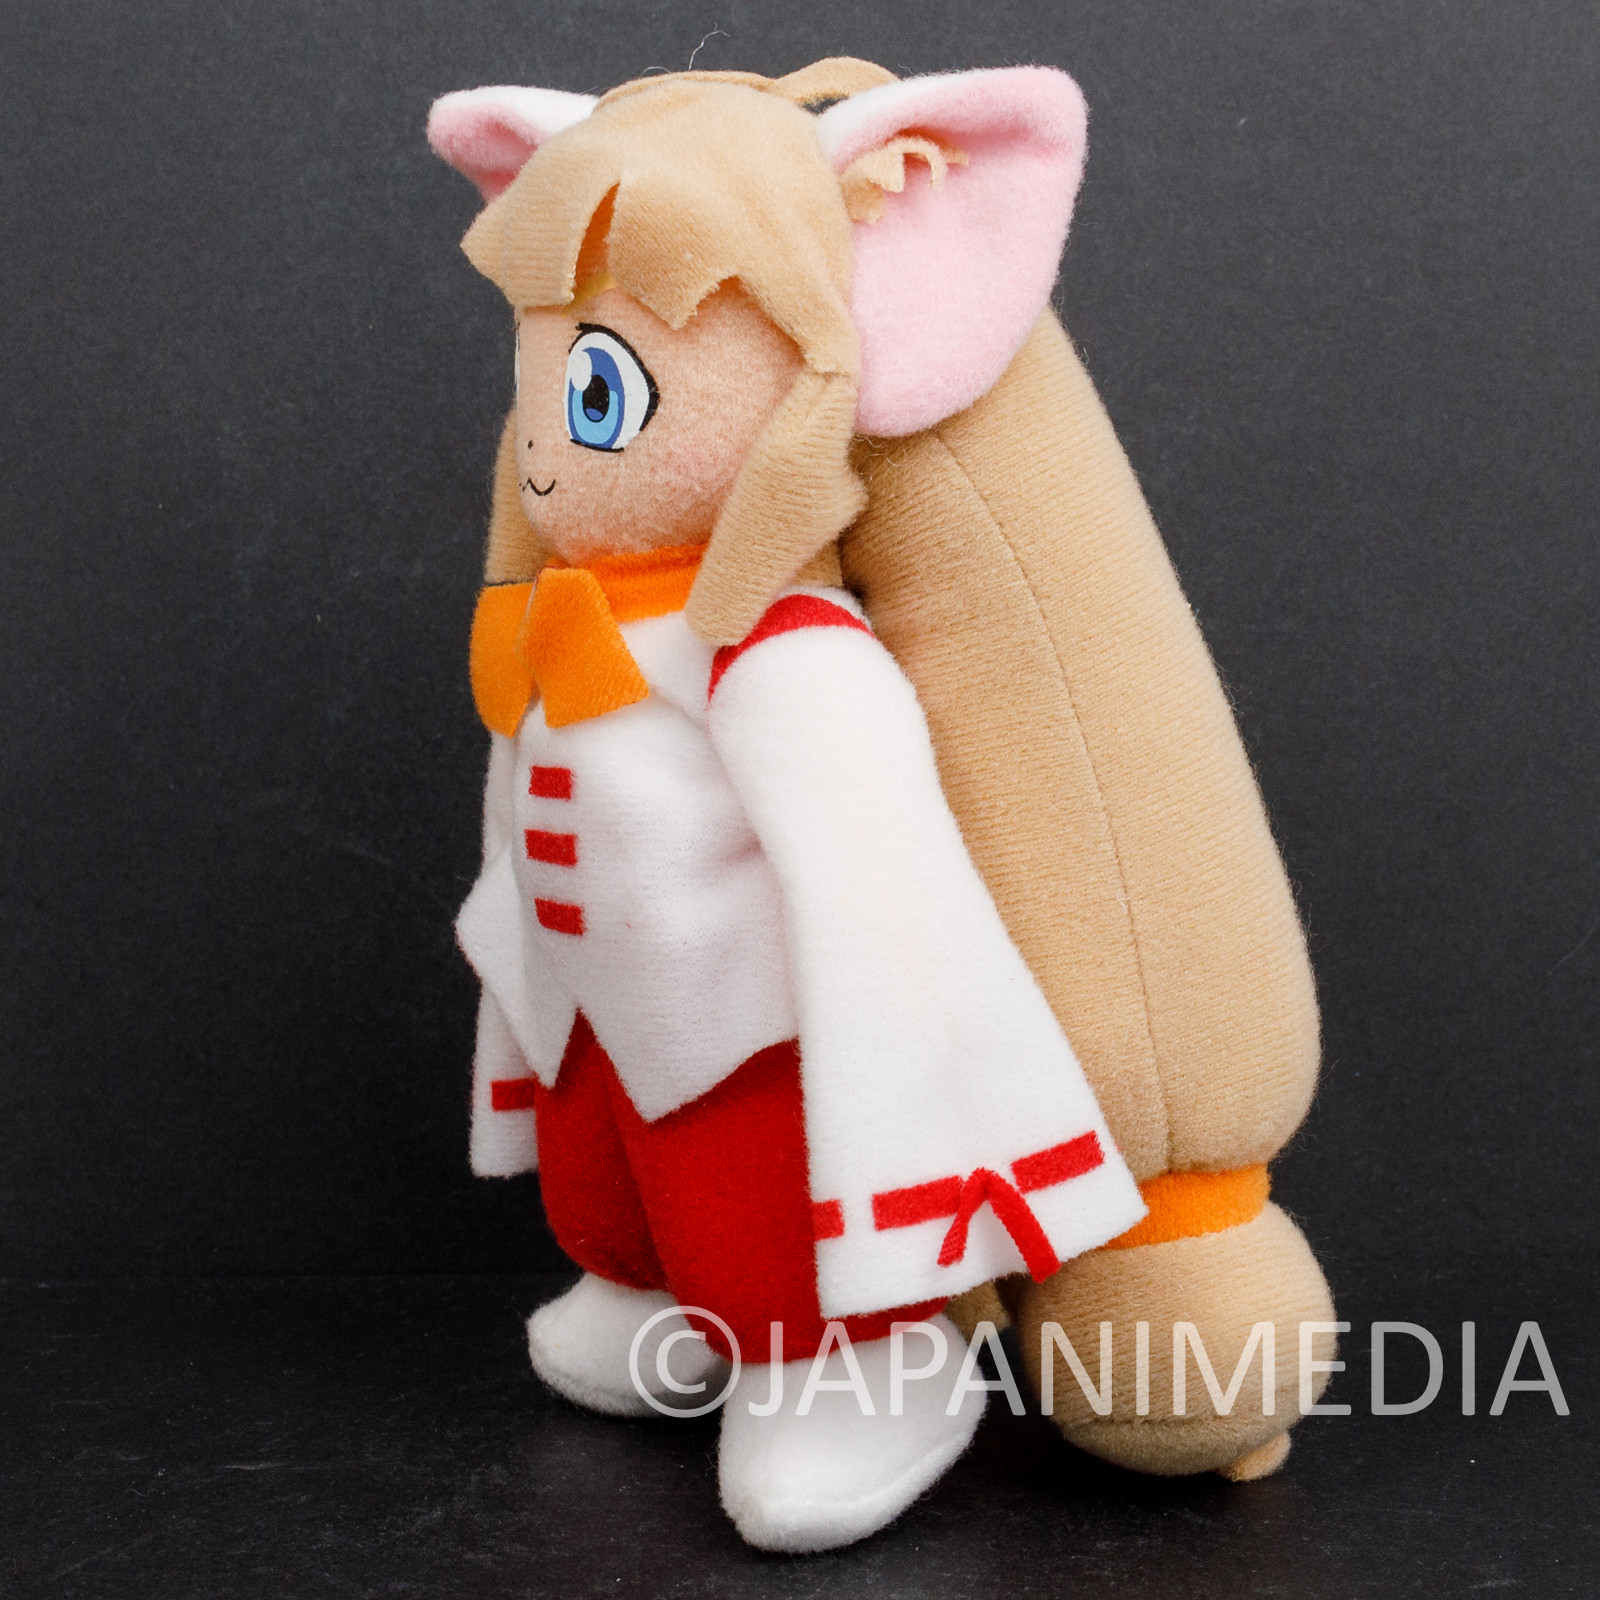 RARE! Tsukuyomi Moon Phase Haiji Plush Doll Limited Item JAPAN ANIME